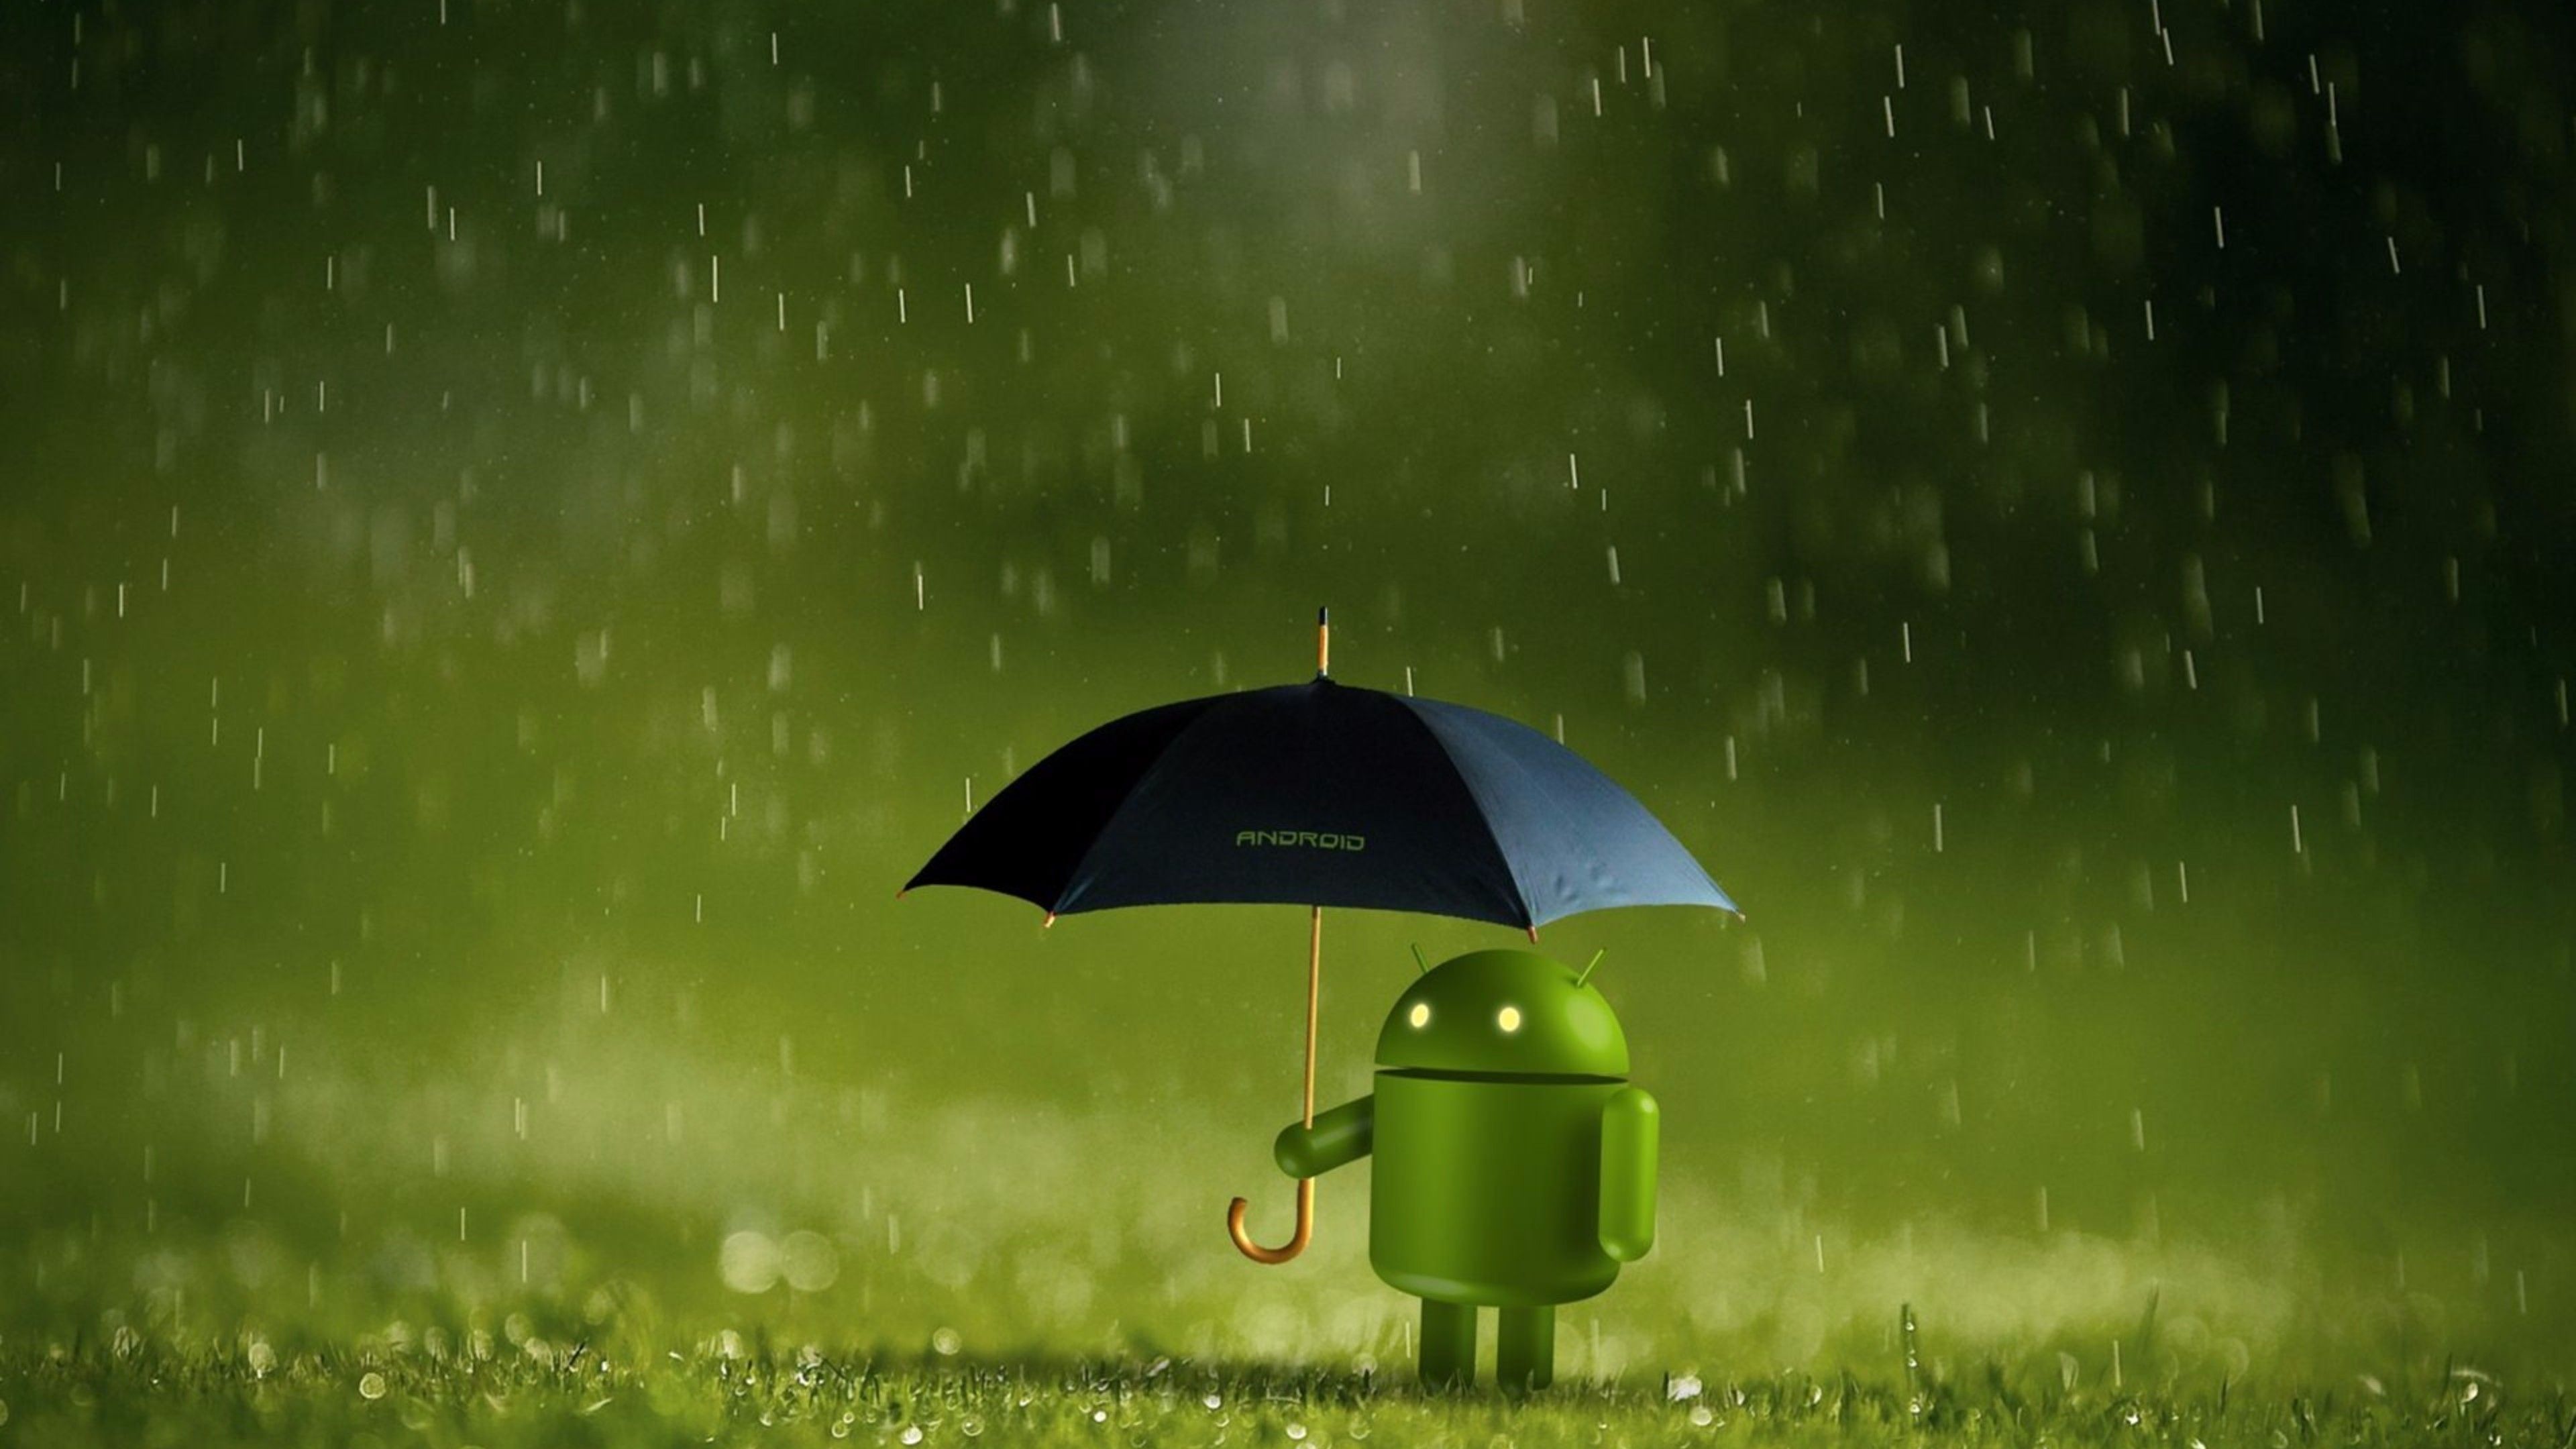 Android Logo Wallpaper